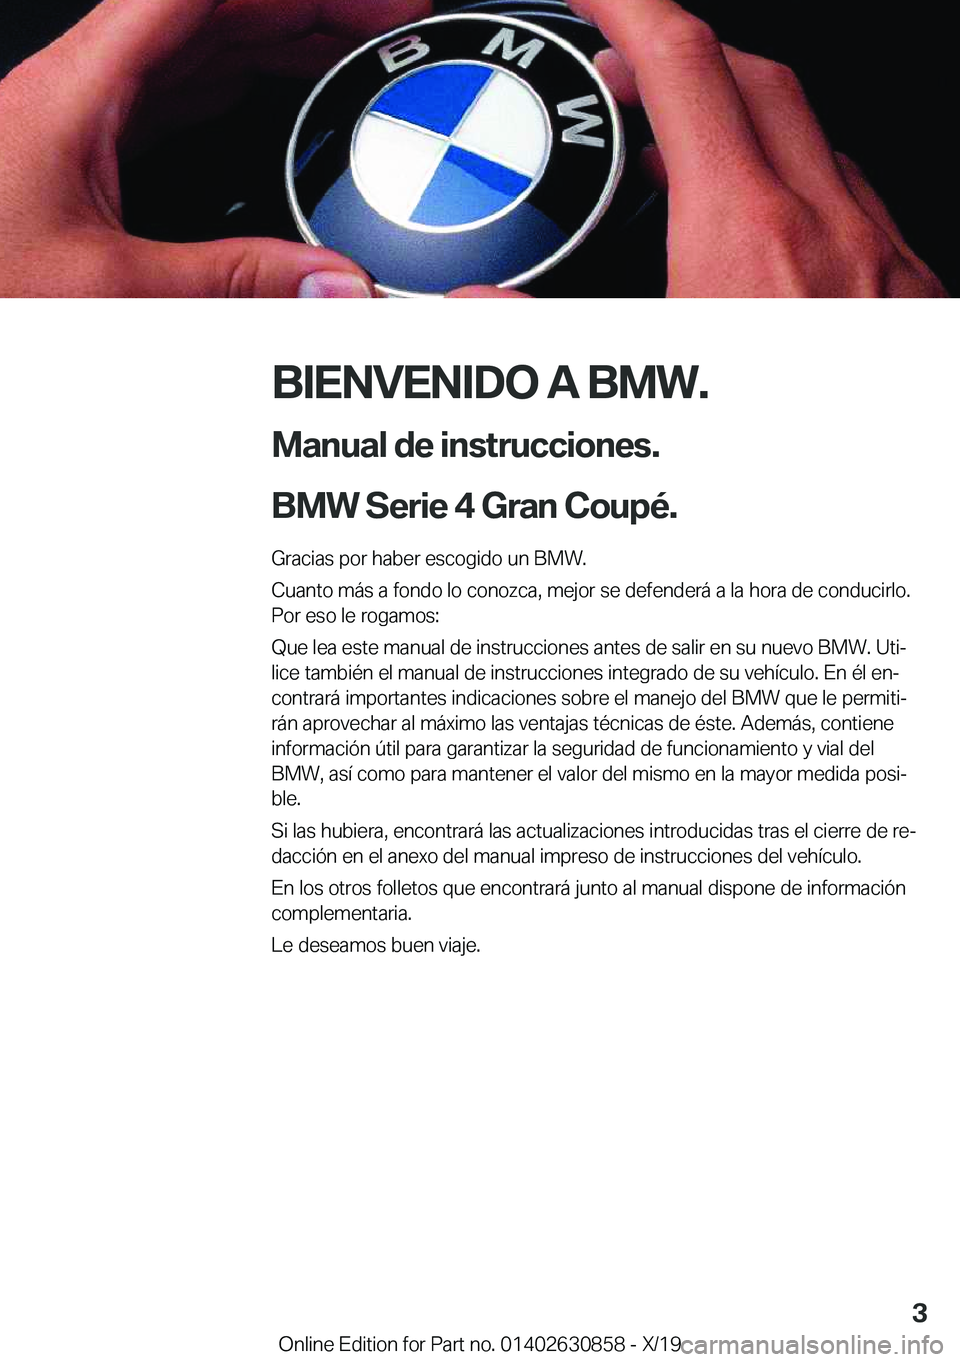 BMW 4 SERIES GRAN COUPE 2020  Manuales de Empleo (in Spanish) �B�I�E�N�V�E�N�I�D�O��A��B�M�W�.
�M�a�n�u�a�l��d�e��i�n�s�t�r�u�c�c�i�o�n�e�s�.
�B�M�W��S�e�r�i�e��4��G�r�a�n��C�o�u�p�